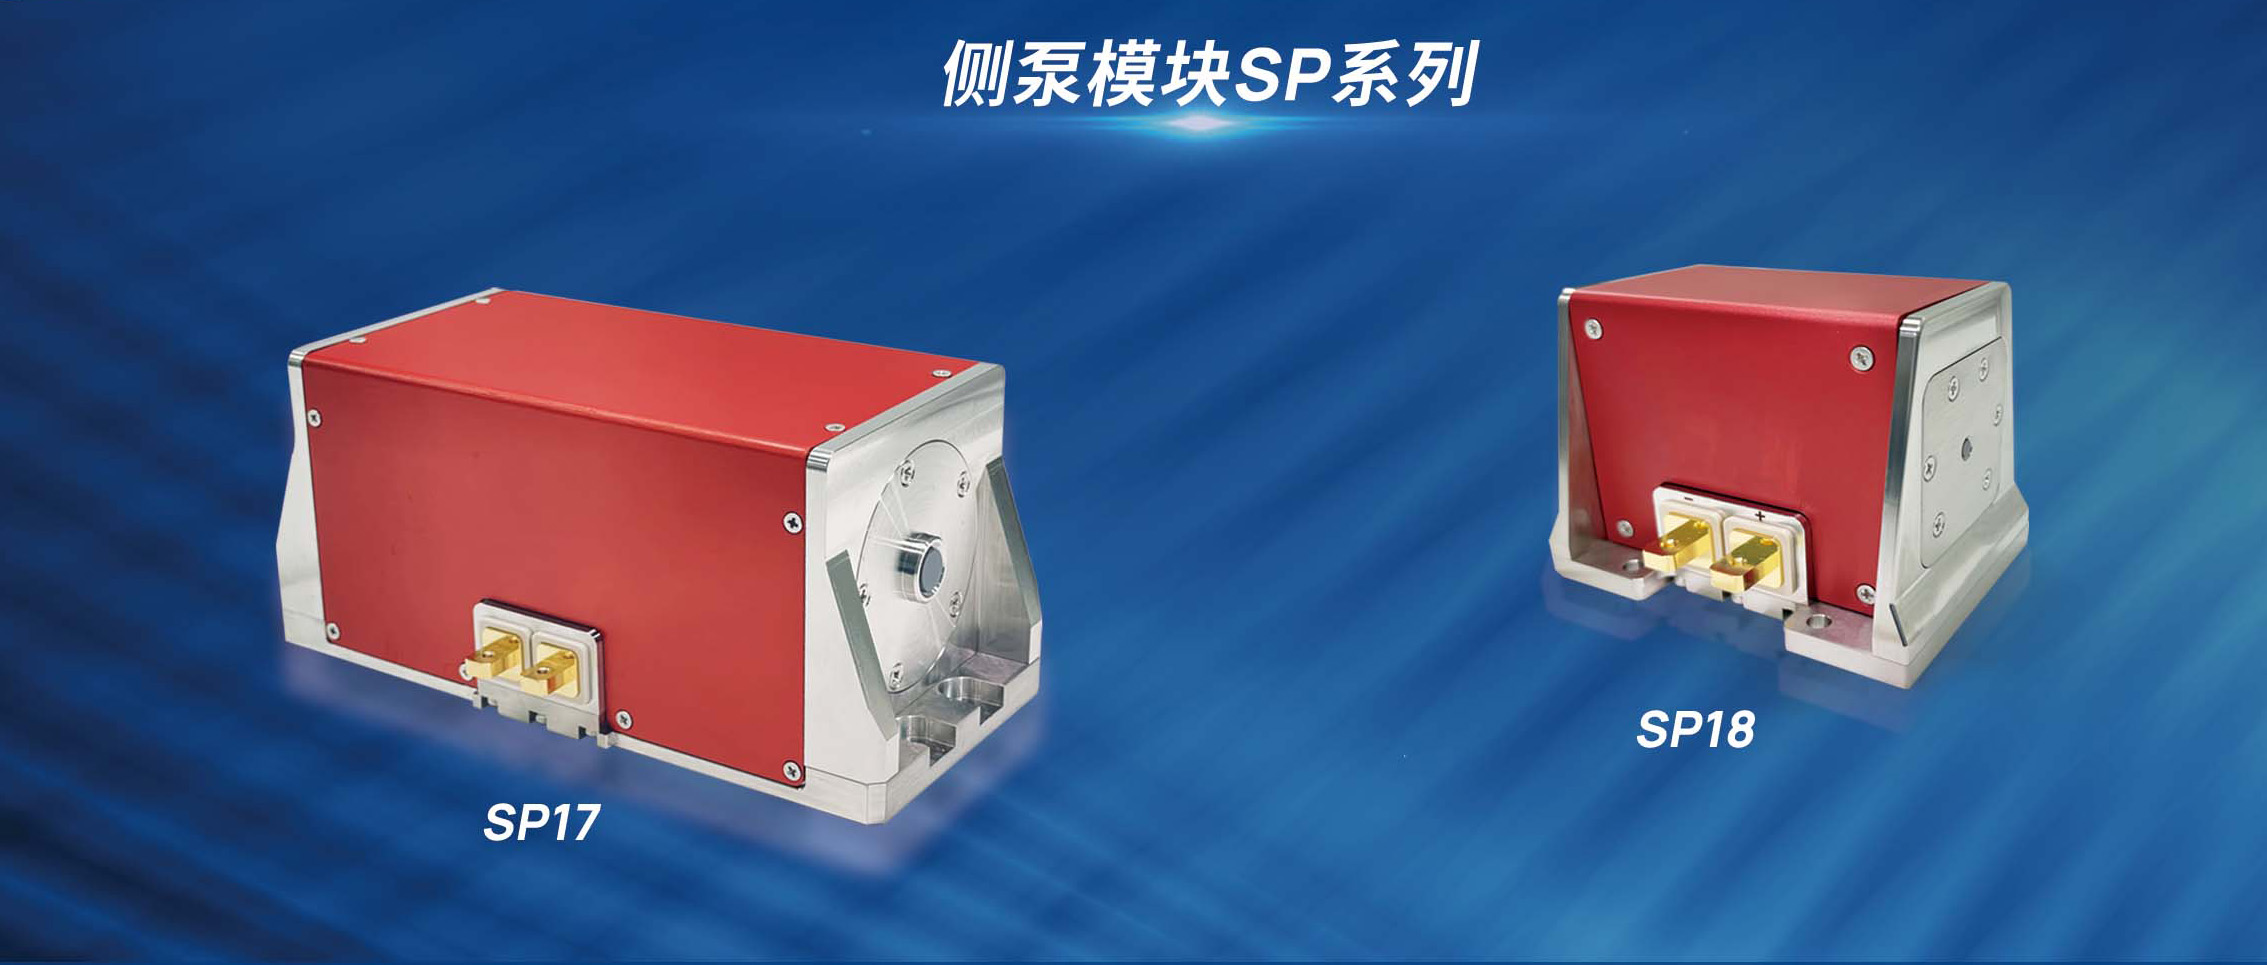 SP17 & SP18 -- High-Power Diode Laser Side Pumped Modules